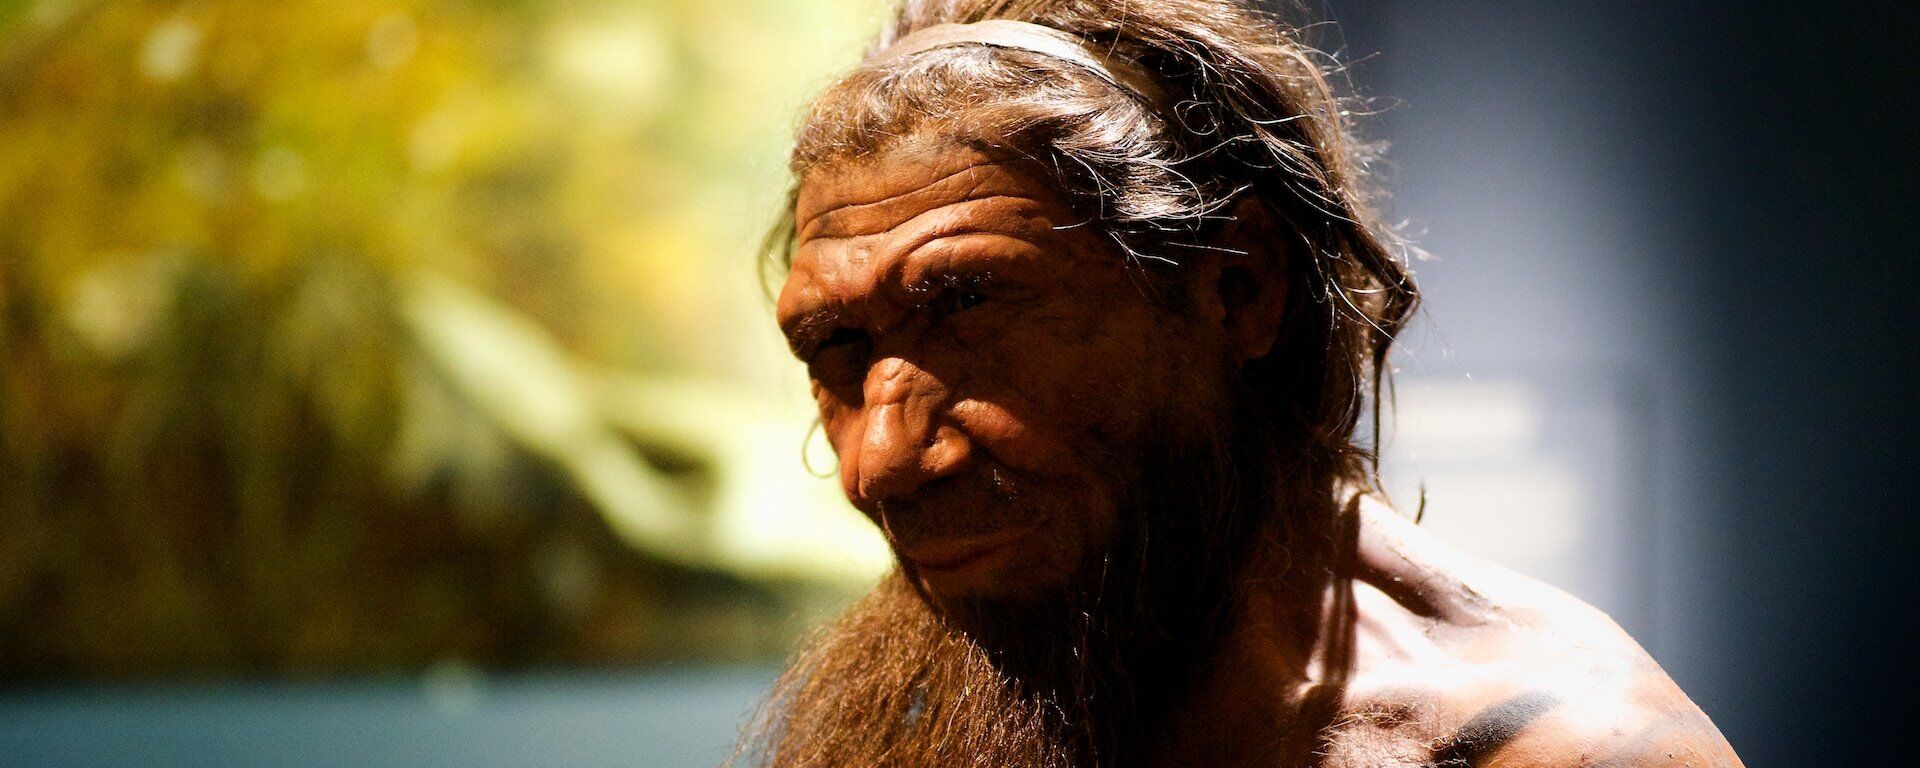 Un neandertal (imagen referencial) - Sputnik Mundo, 1920, 16.07.2022